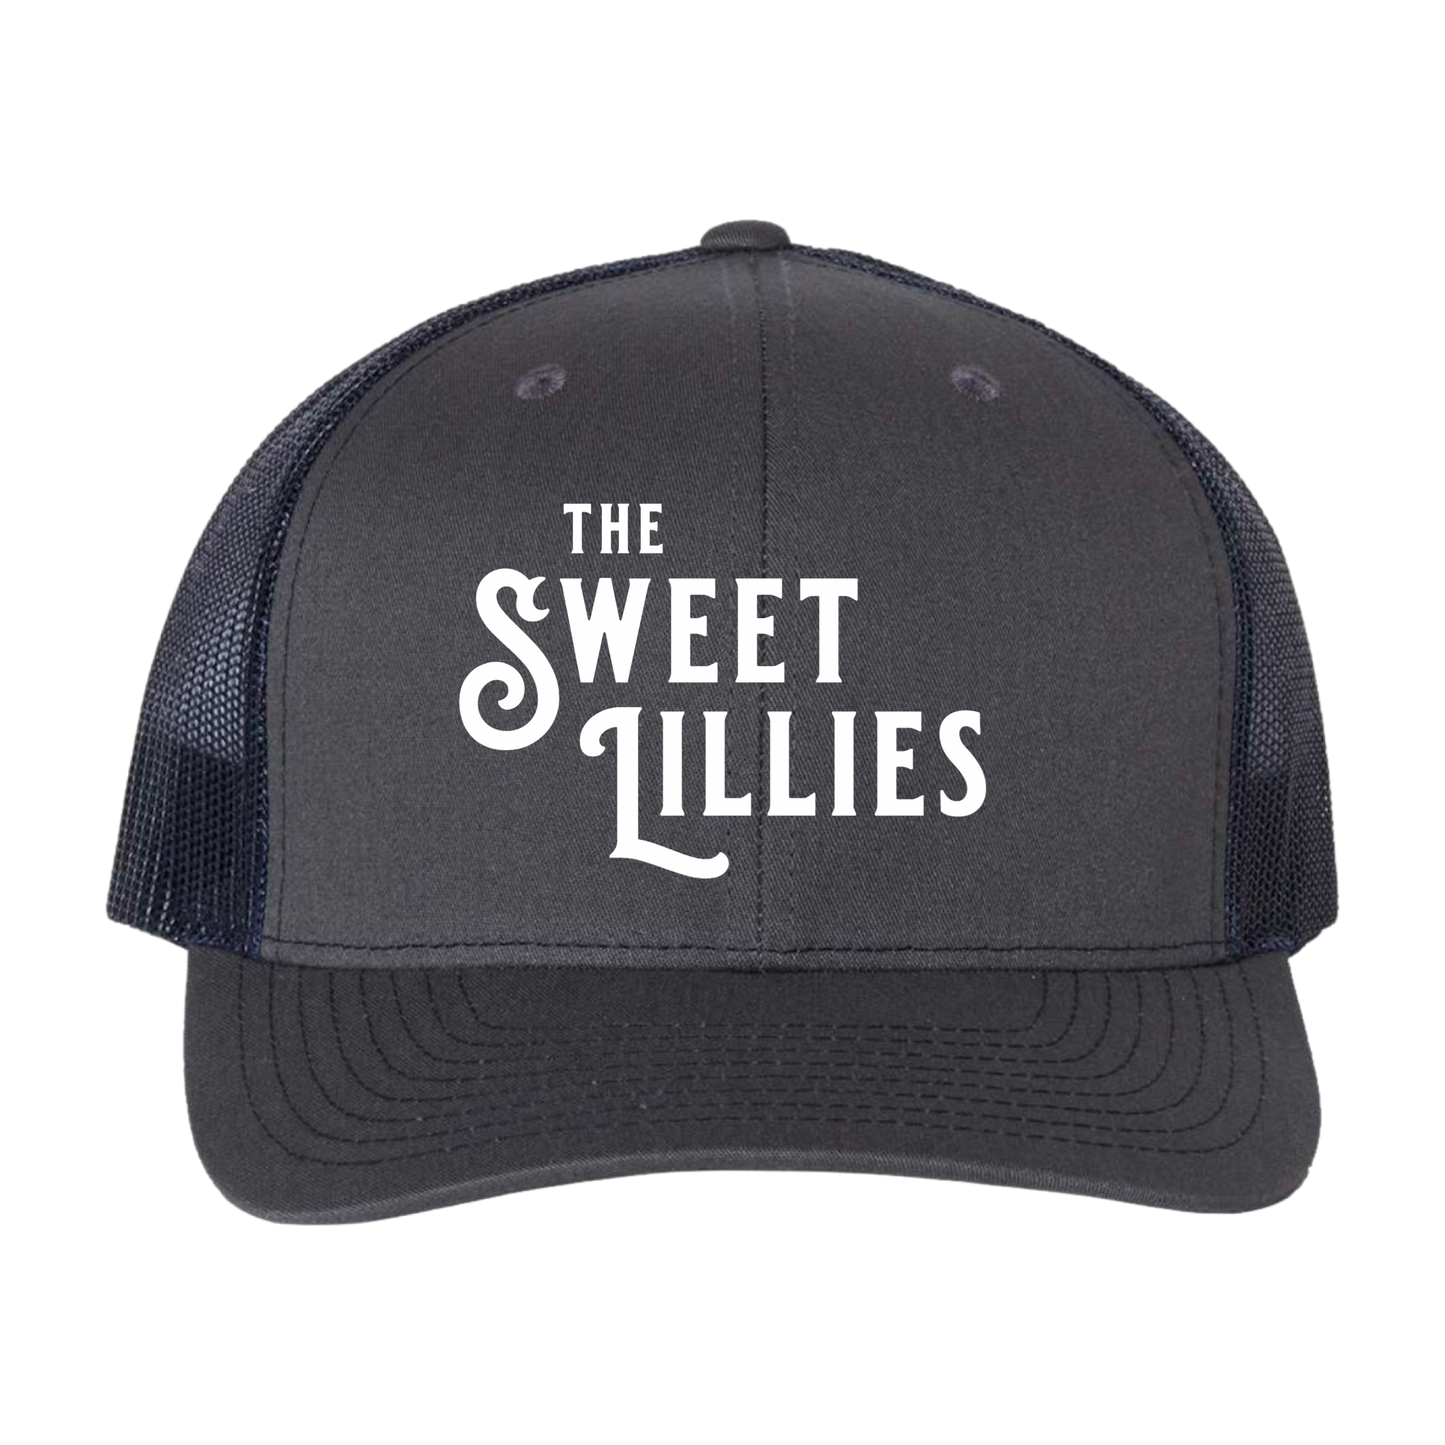 The Sweet Lillies Logo Trucker Hat